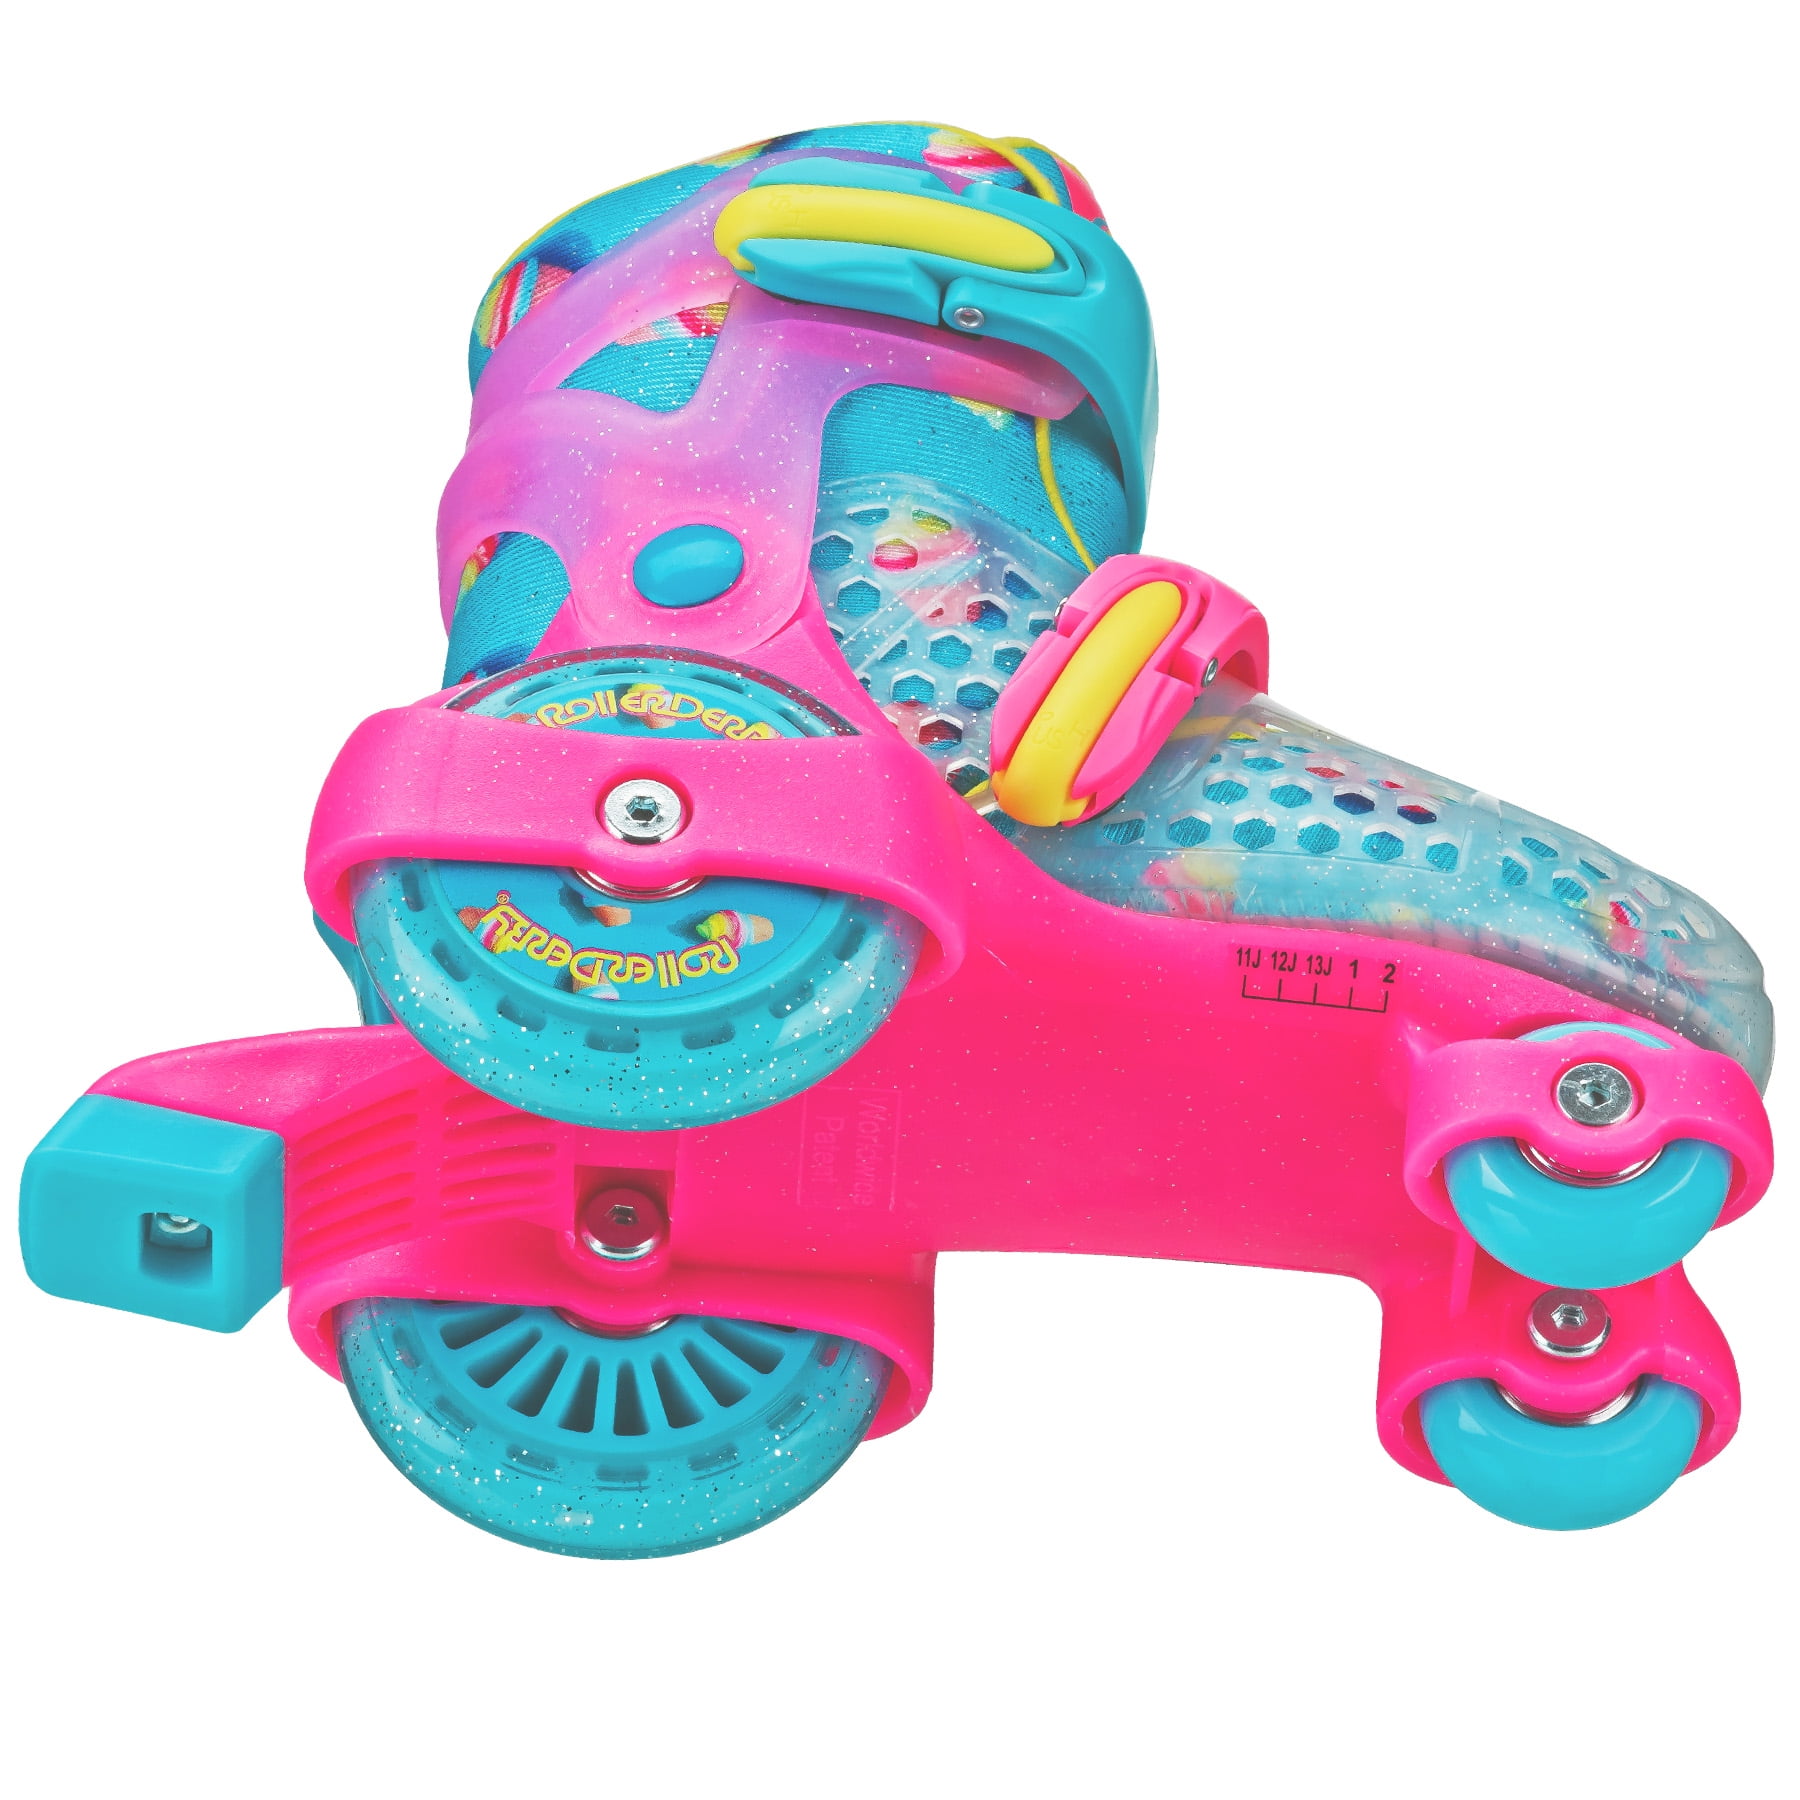 Fun Roll Boy's Jr Adjustable Roller Skate 